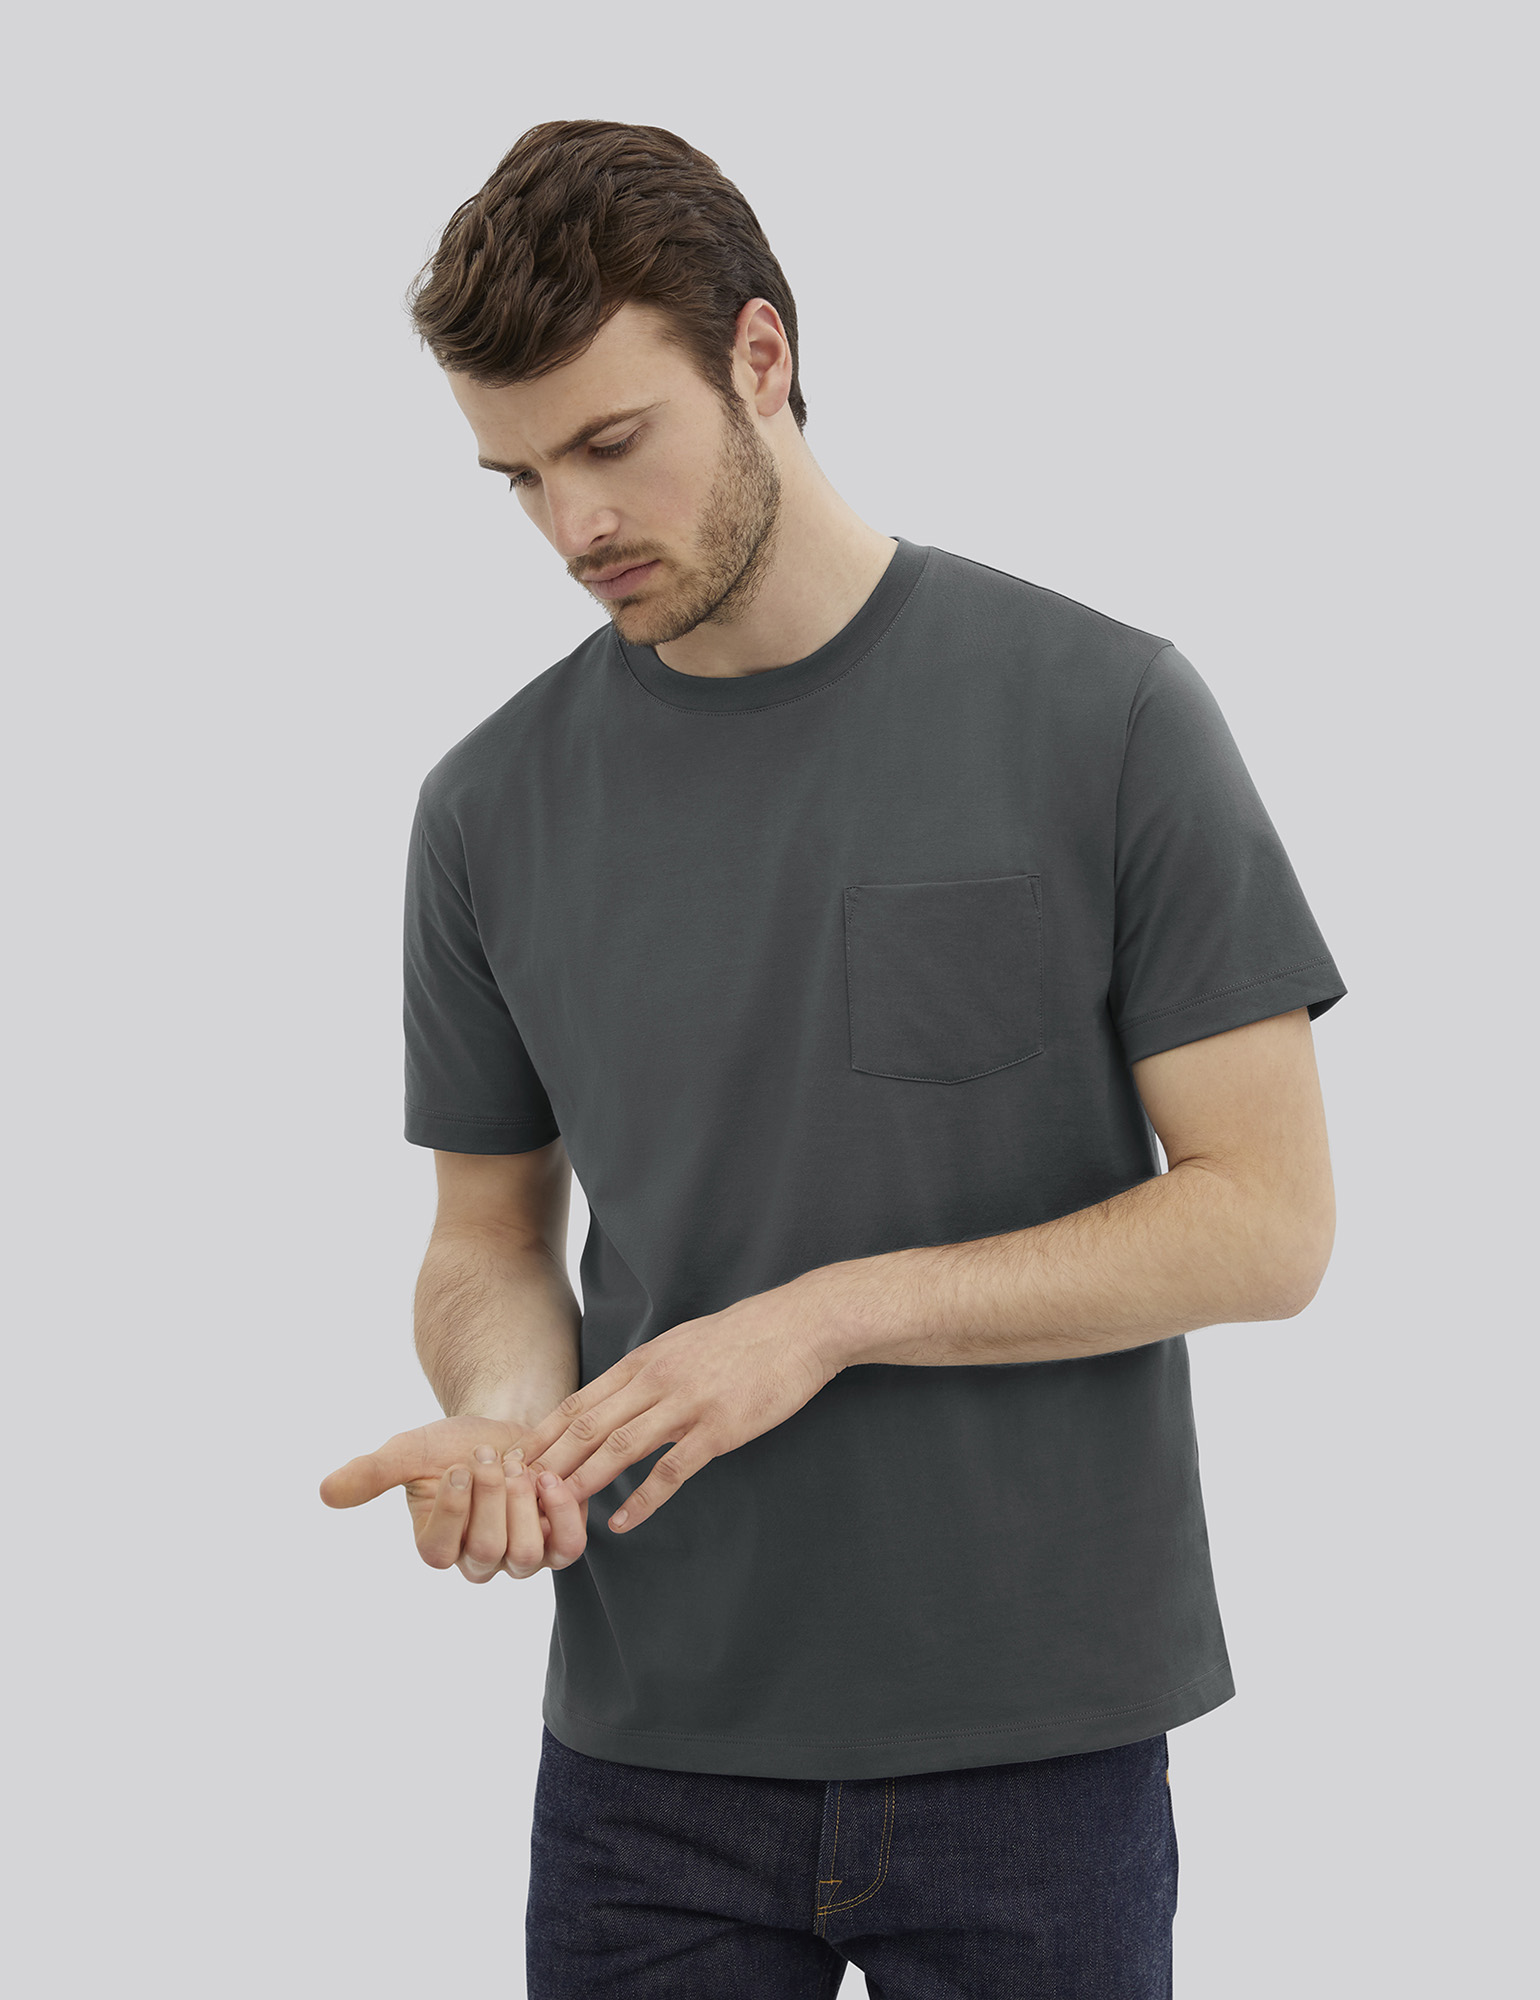 Pocket T Shirt, men's t-shirts